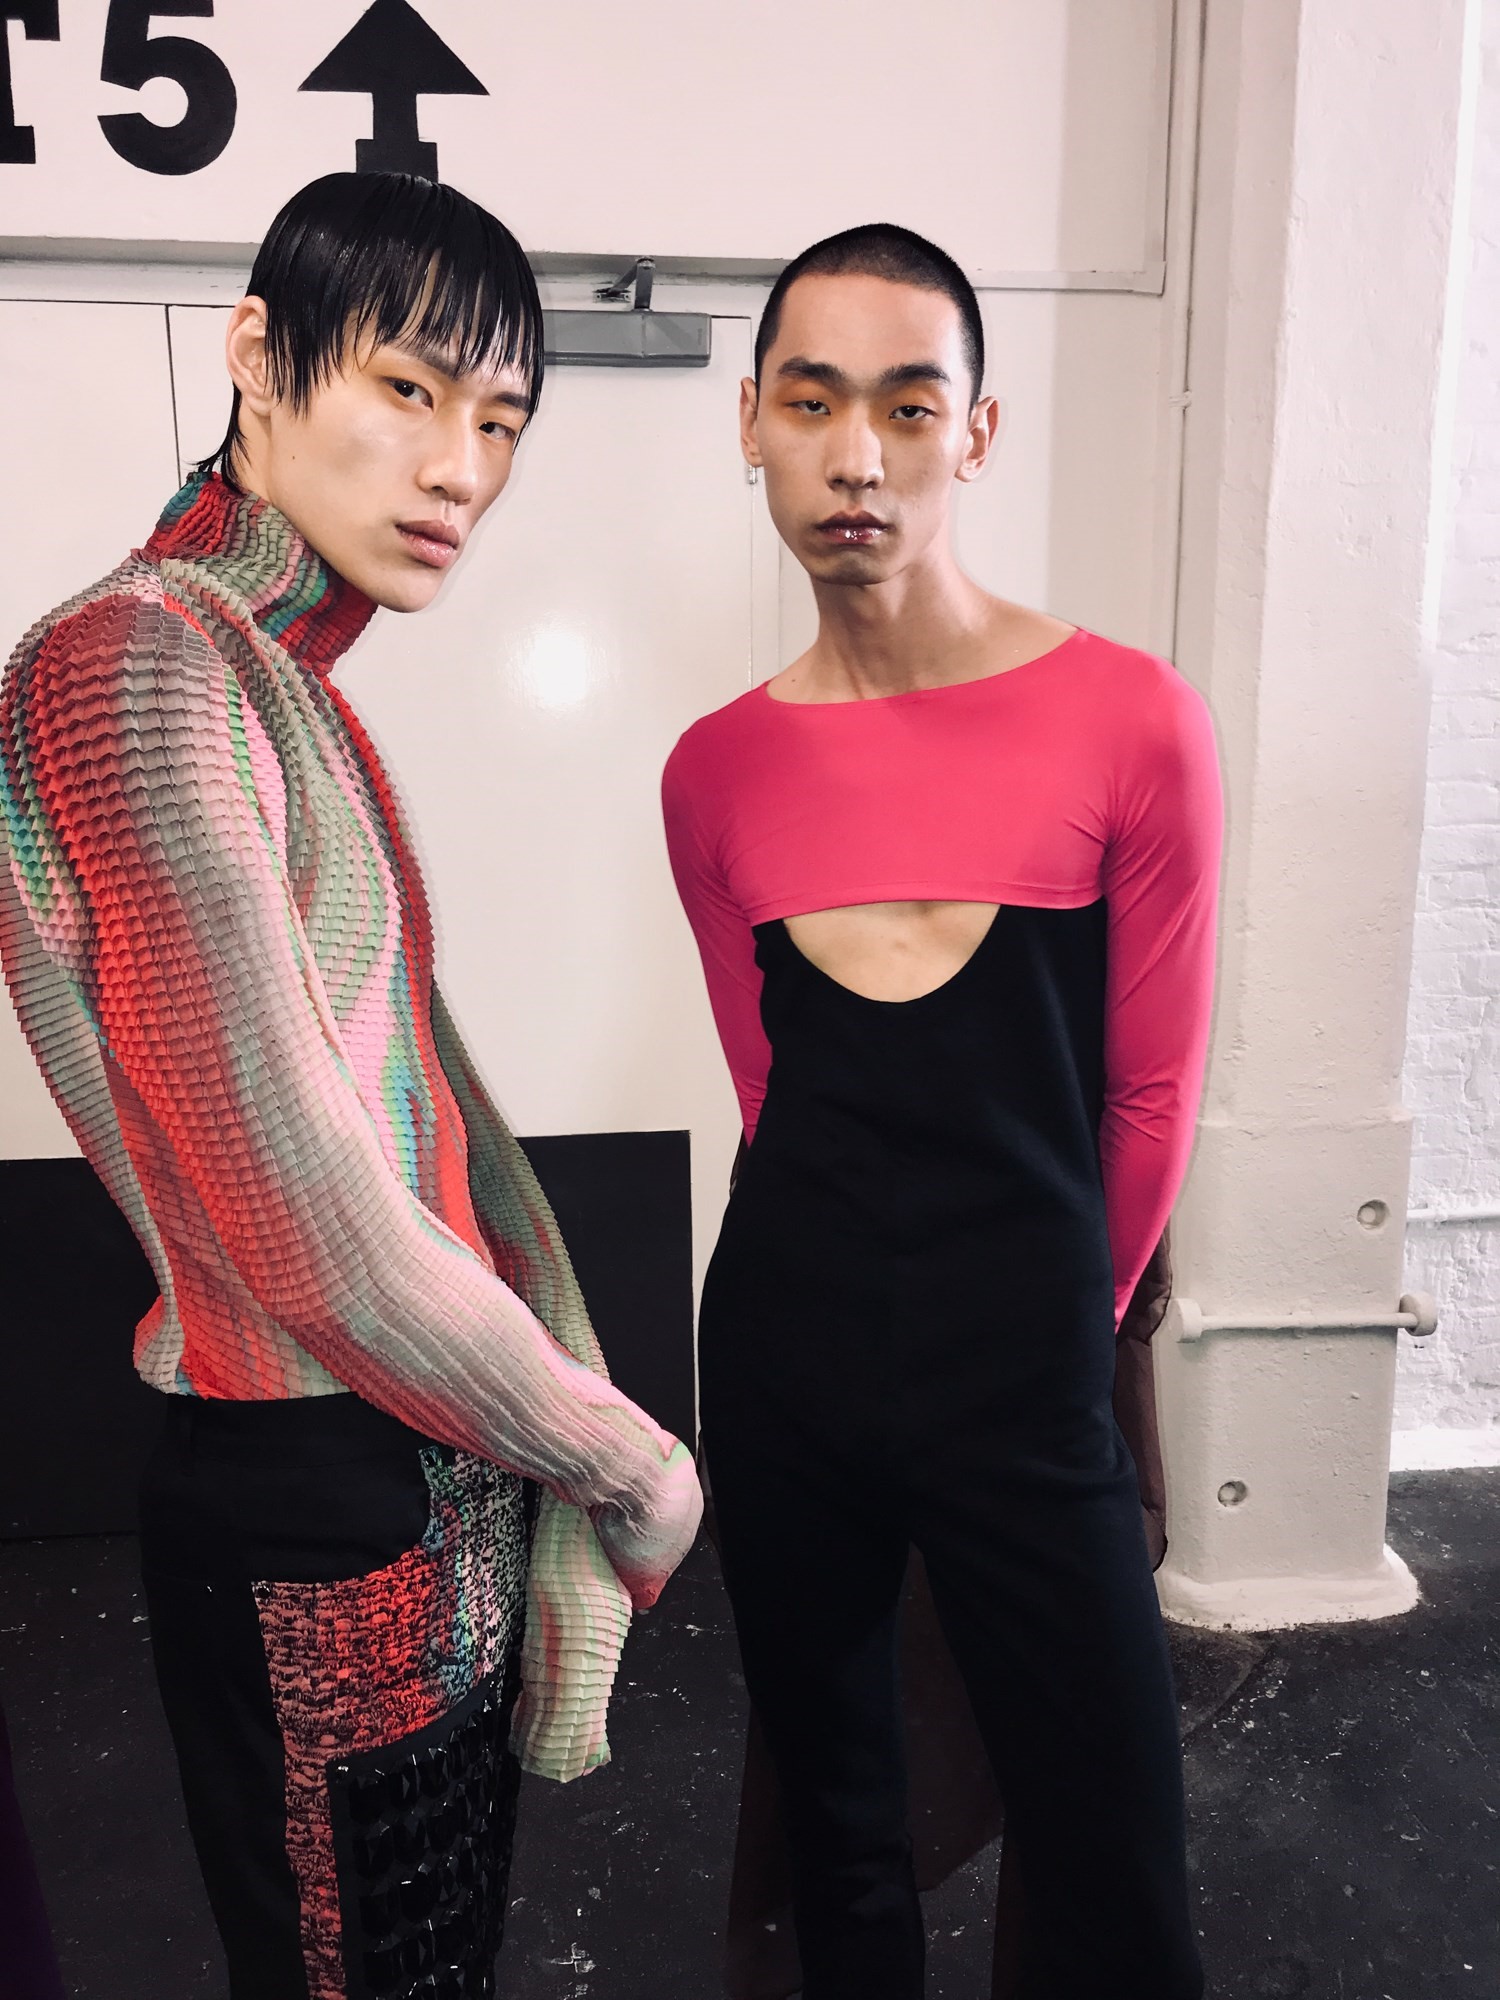 androgynous fashion designers